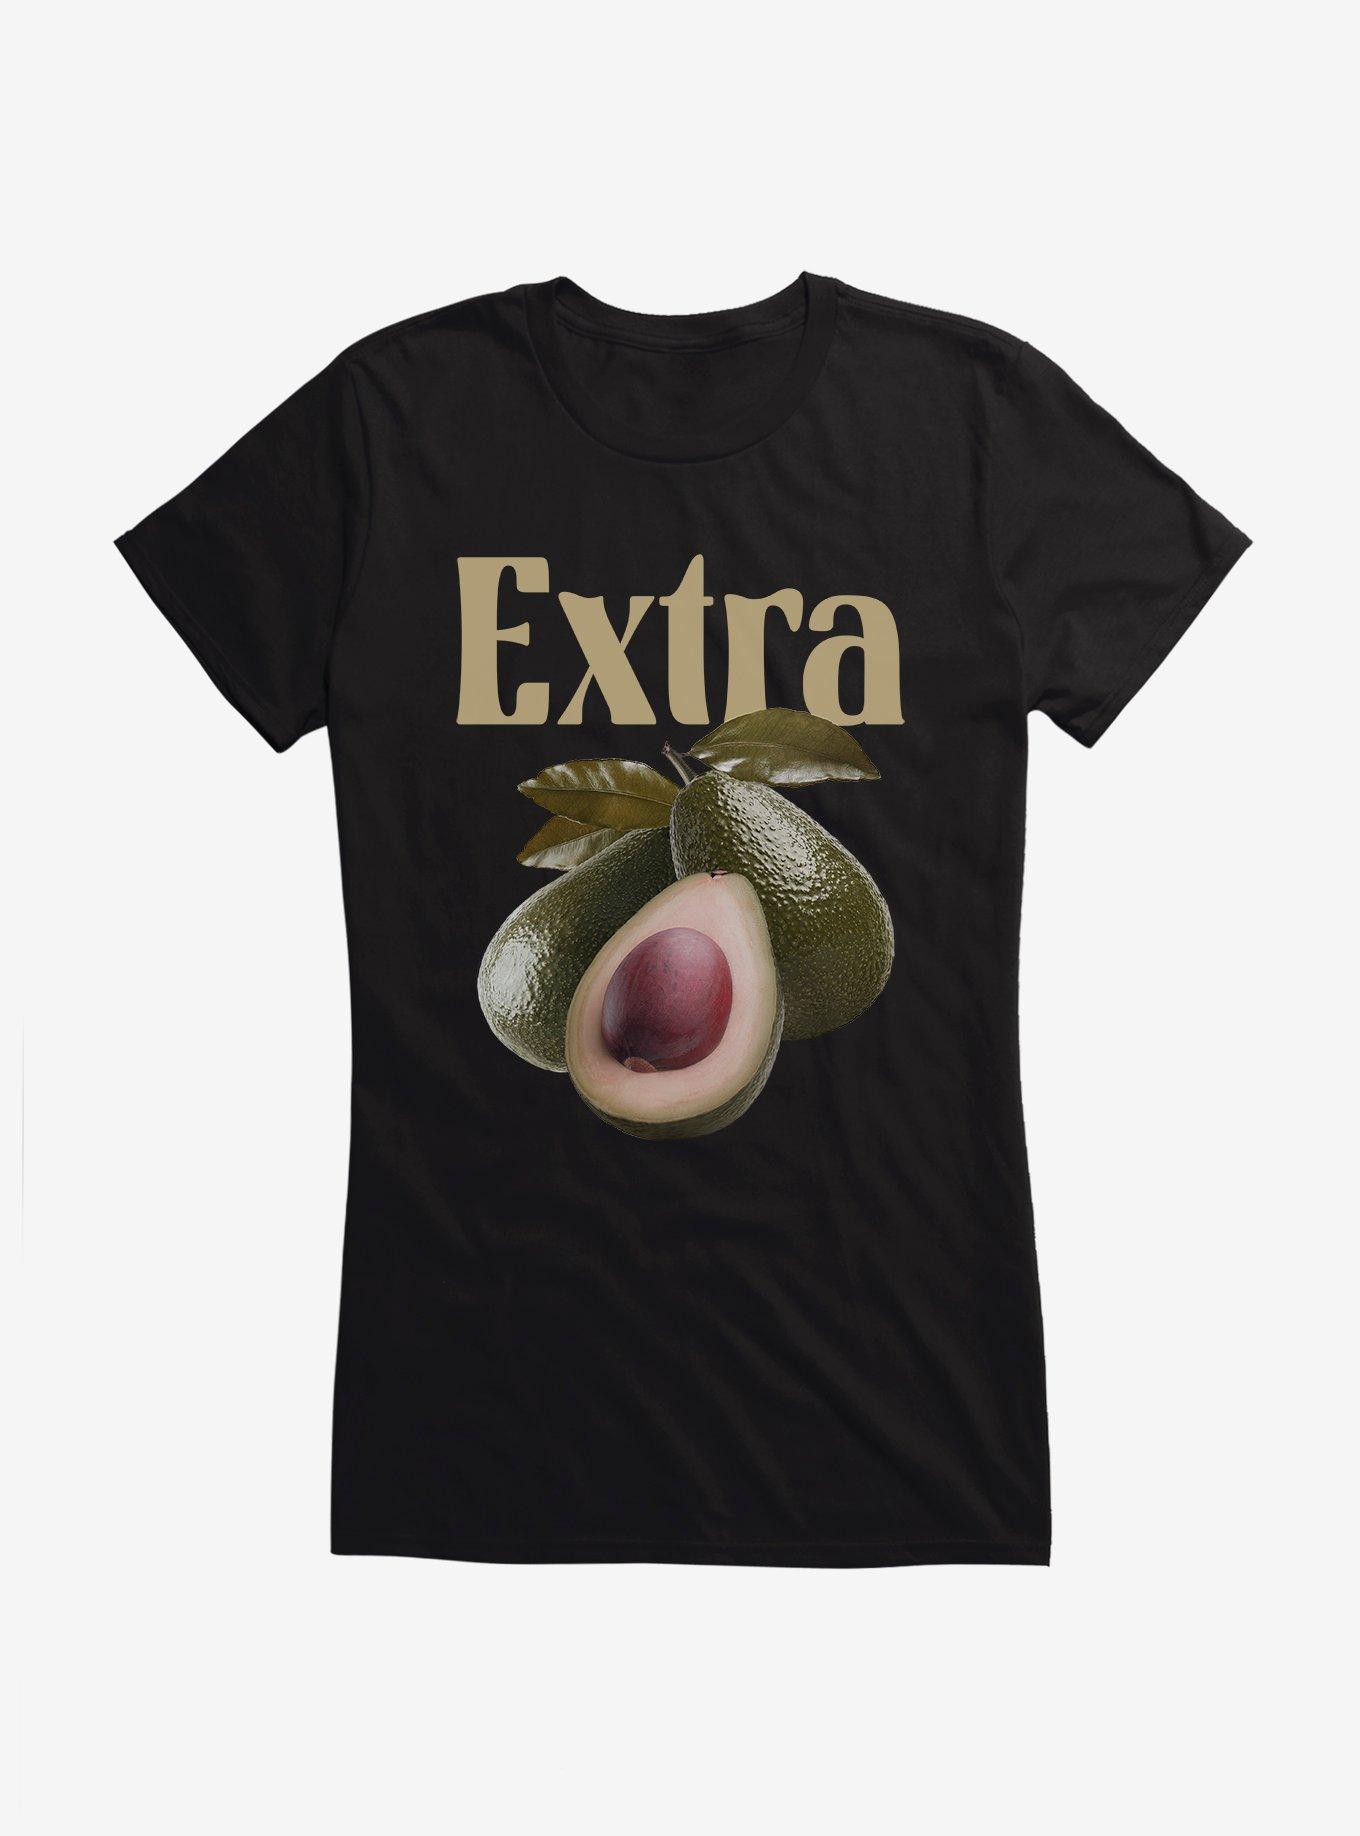 Hot Topic Extra Avocado Girls T-Shirt